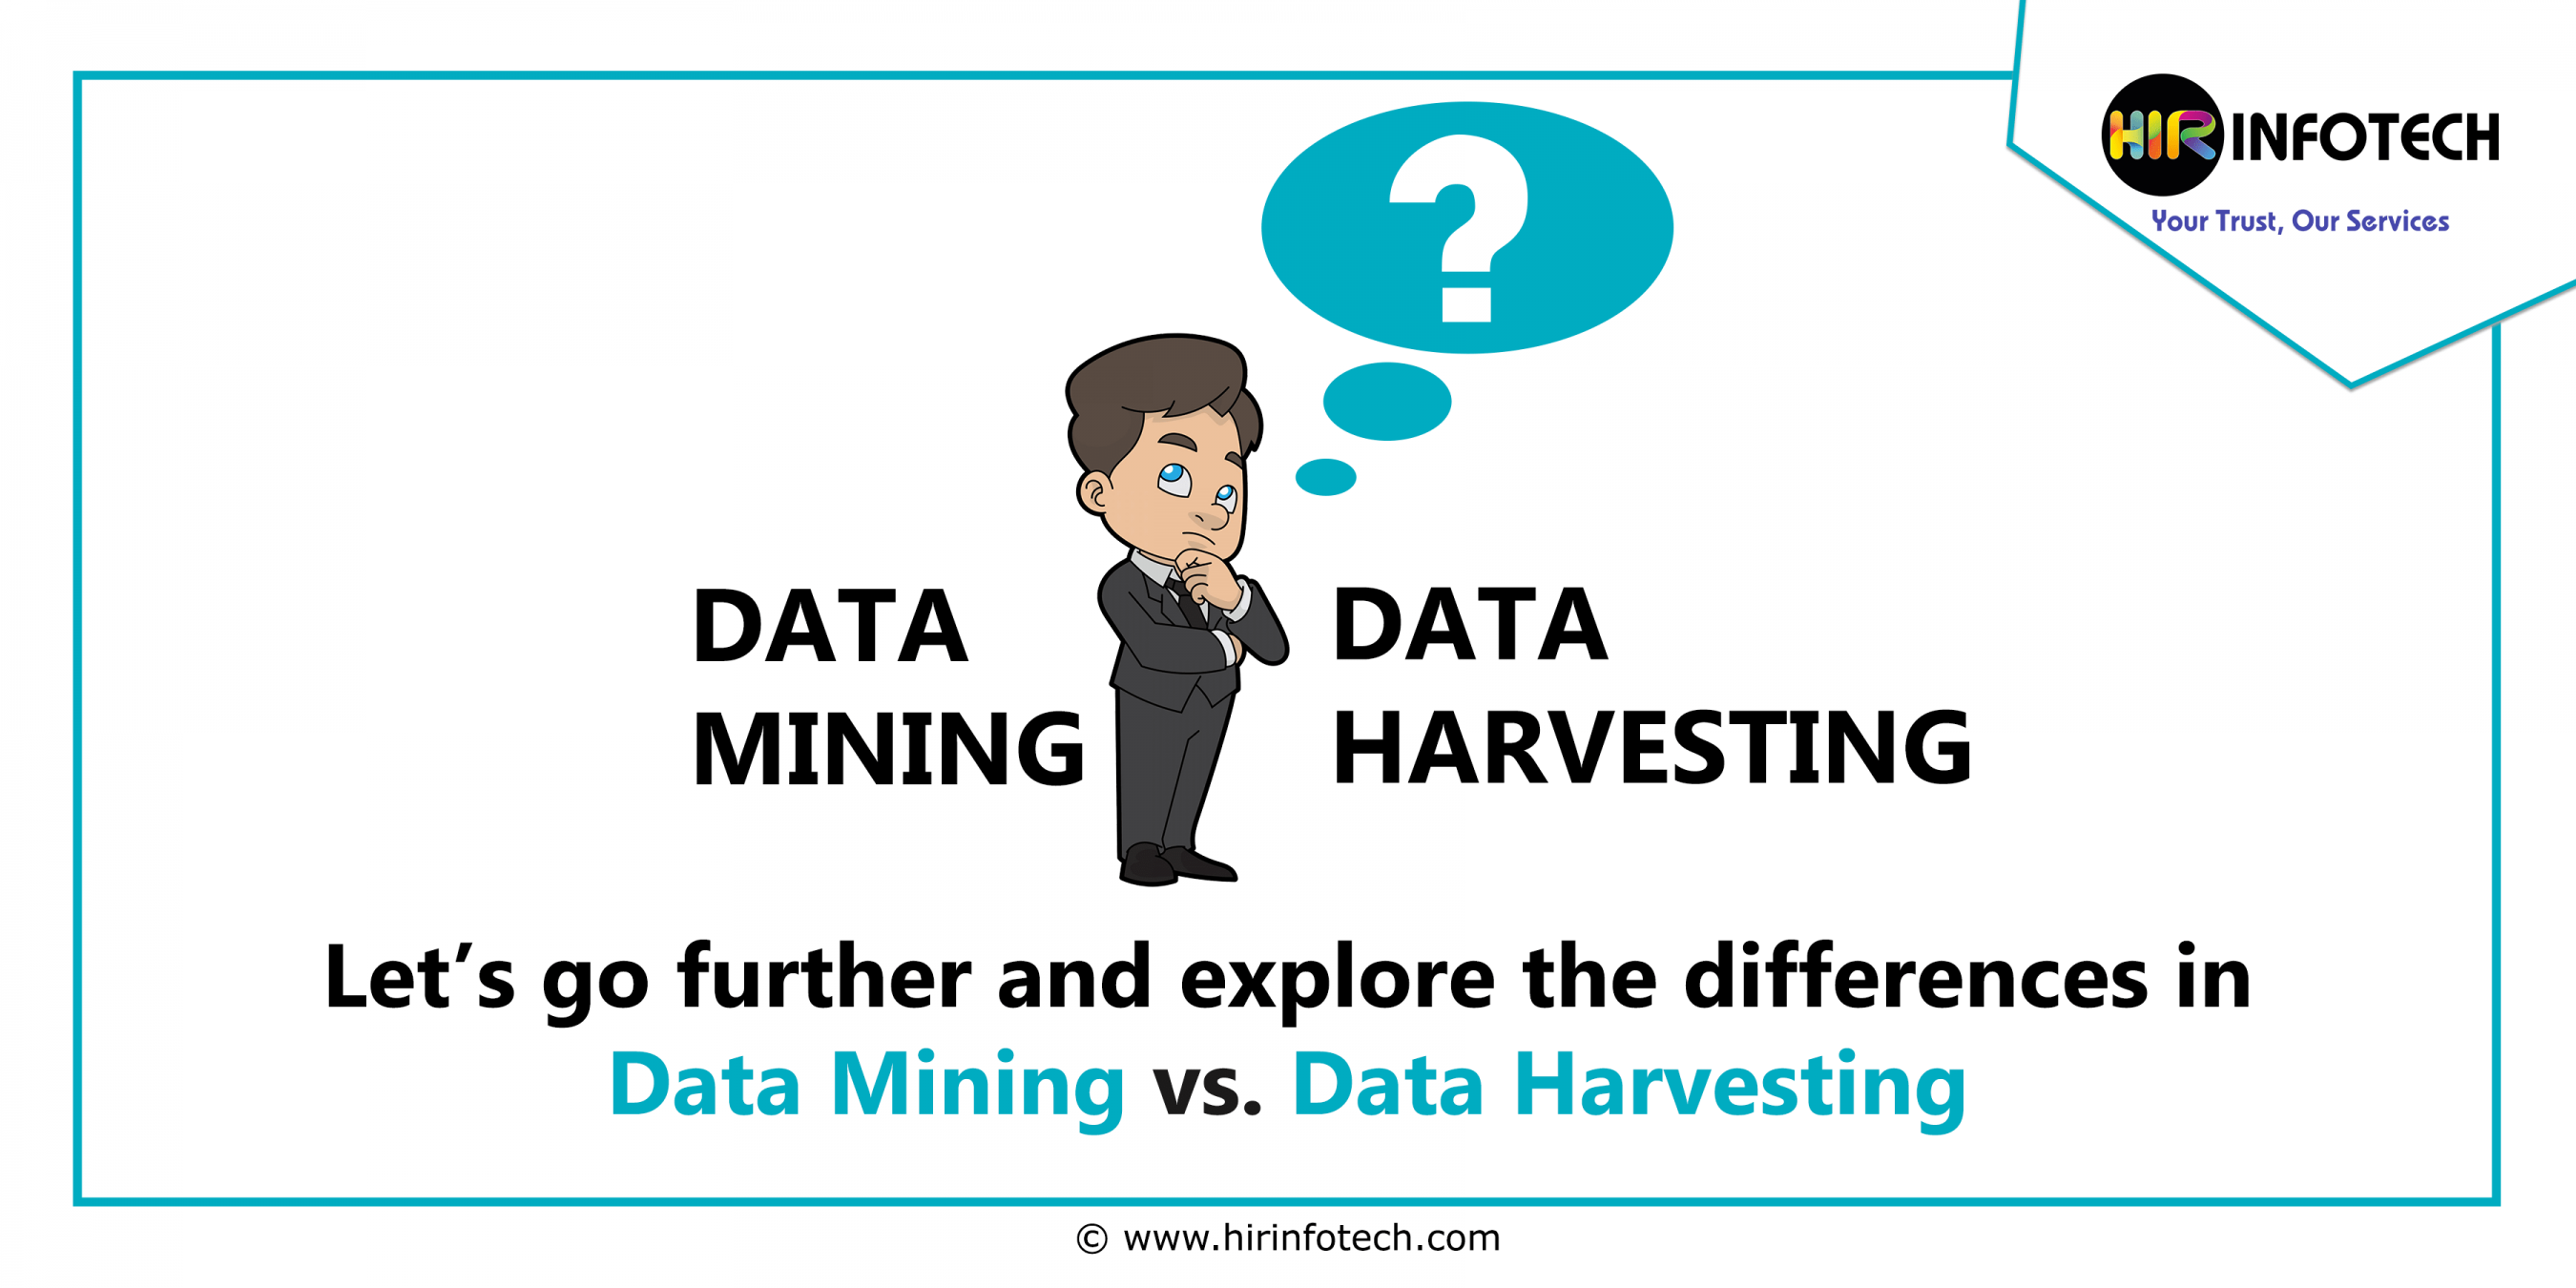 #DataMining #DataHarvesting #DataExtraction #webscraping #BusinessGrowth #Crawling #Crawler #USA #France #NewBlog #Technology #BigData #UAE